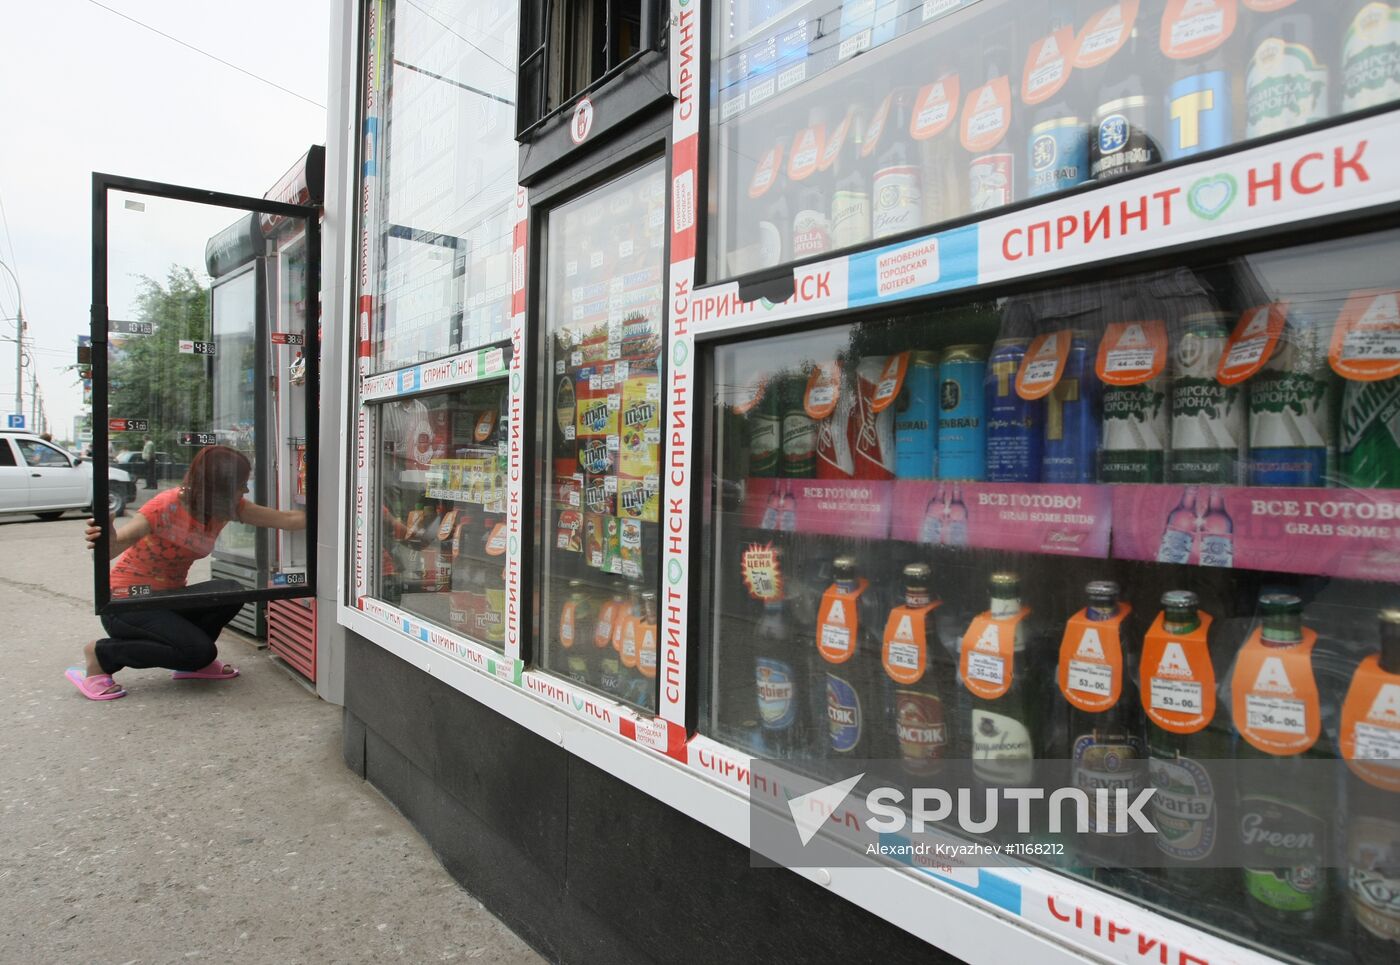 Sale of alcoholic beverages in Novosibirsk